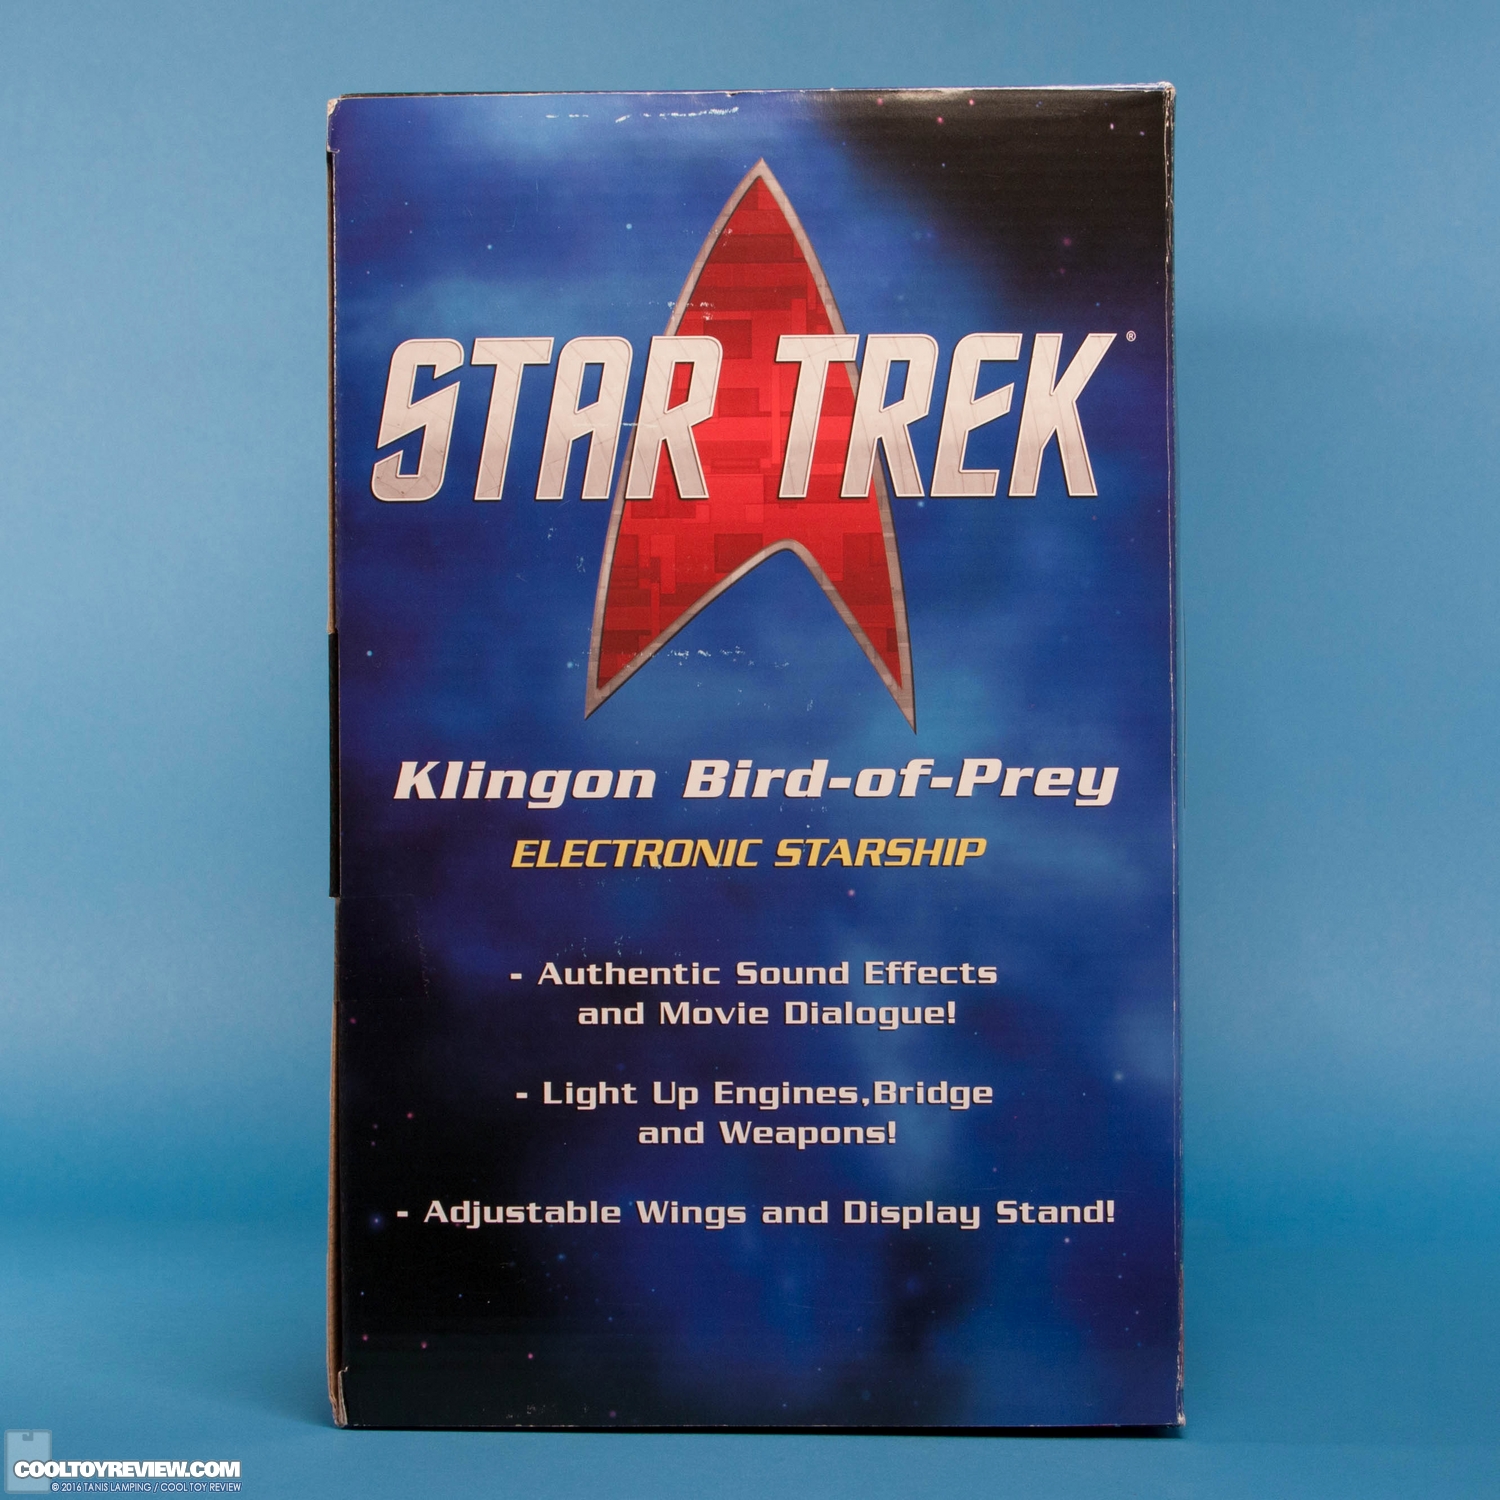 klingon-bird-of-prey-electronic-starship-diamond-select-toys-015.jpg